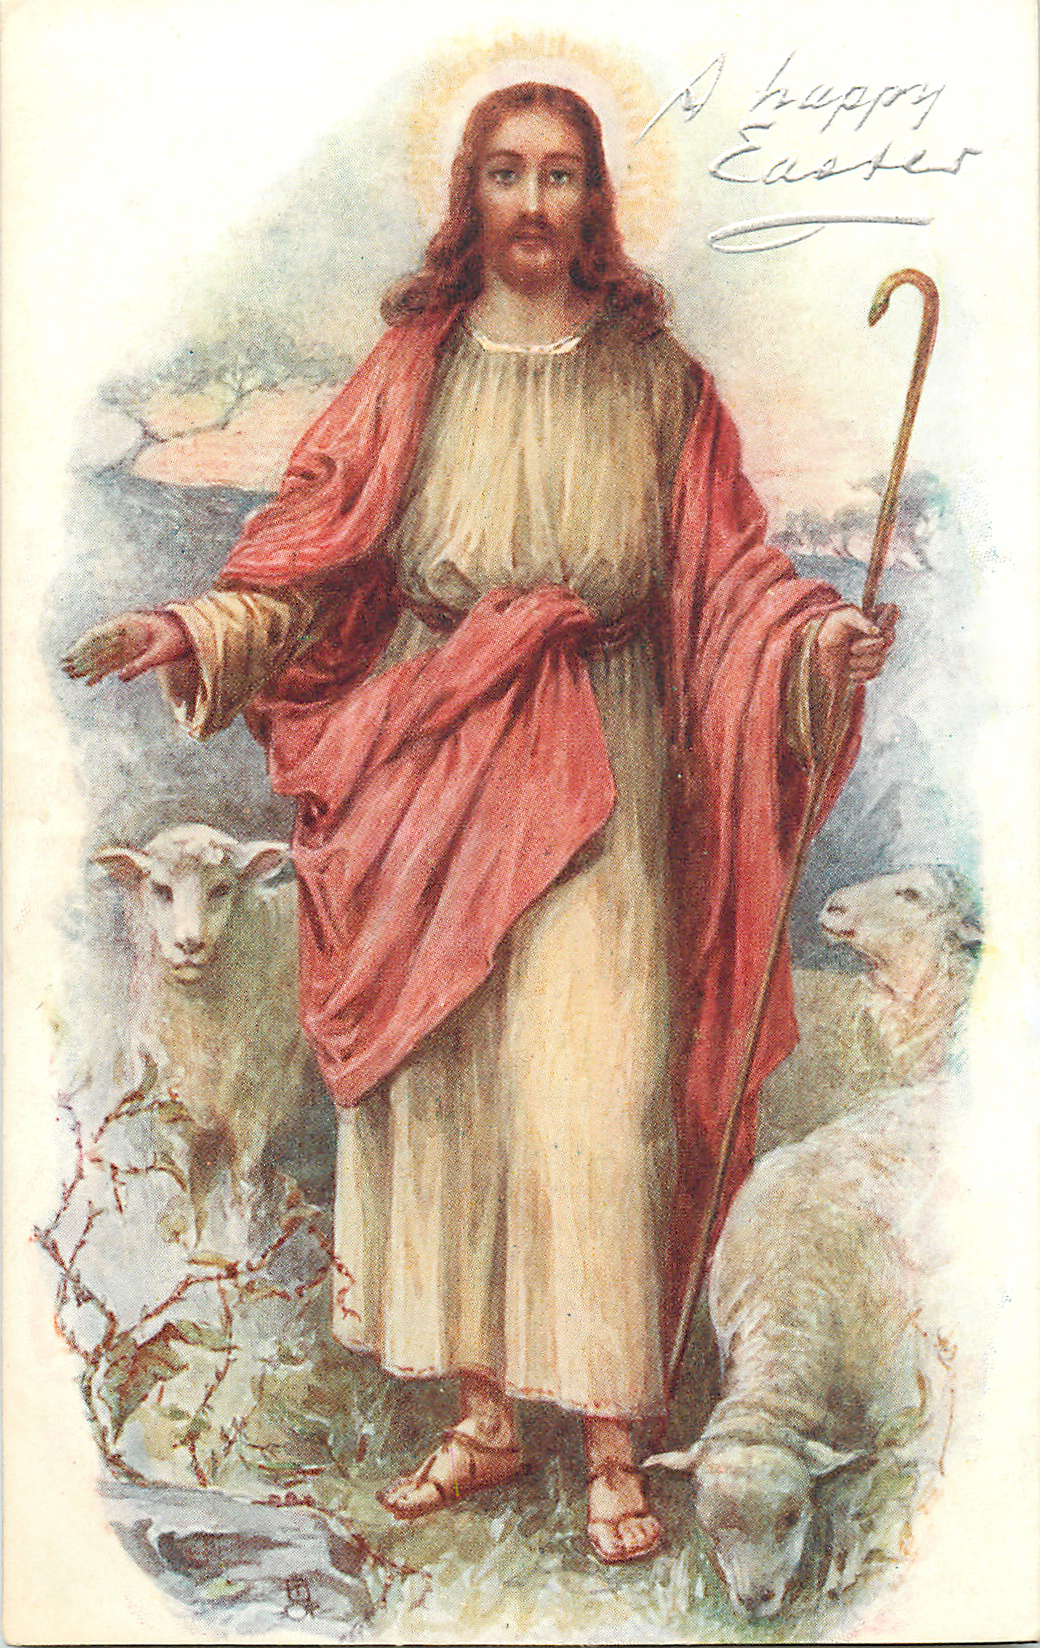 Easter Jesus Image! Graphics Fairy